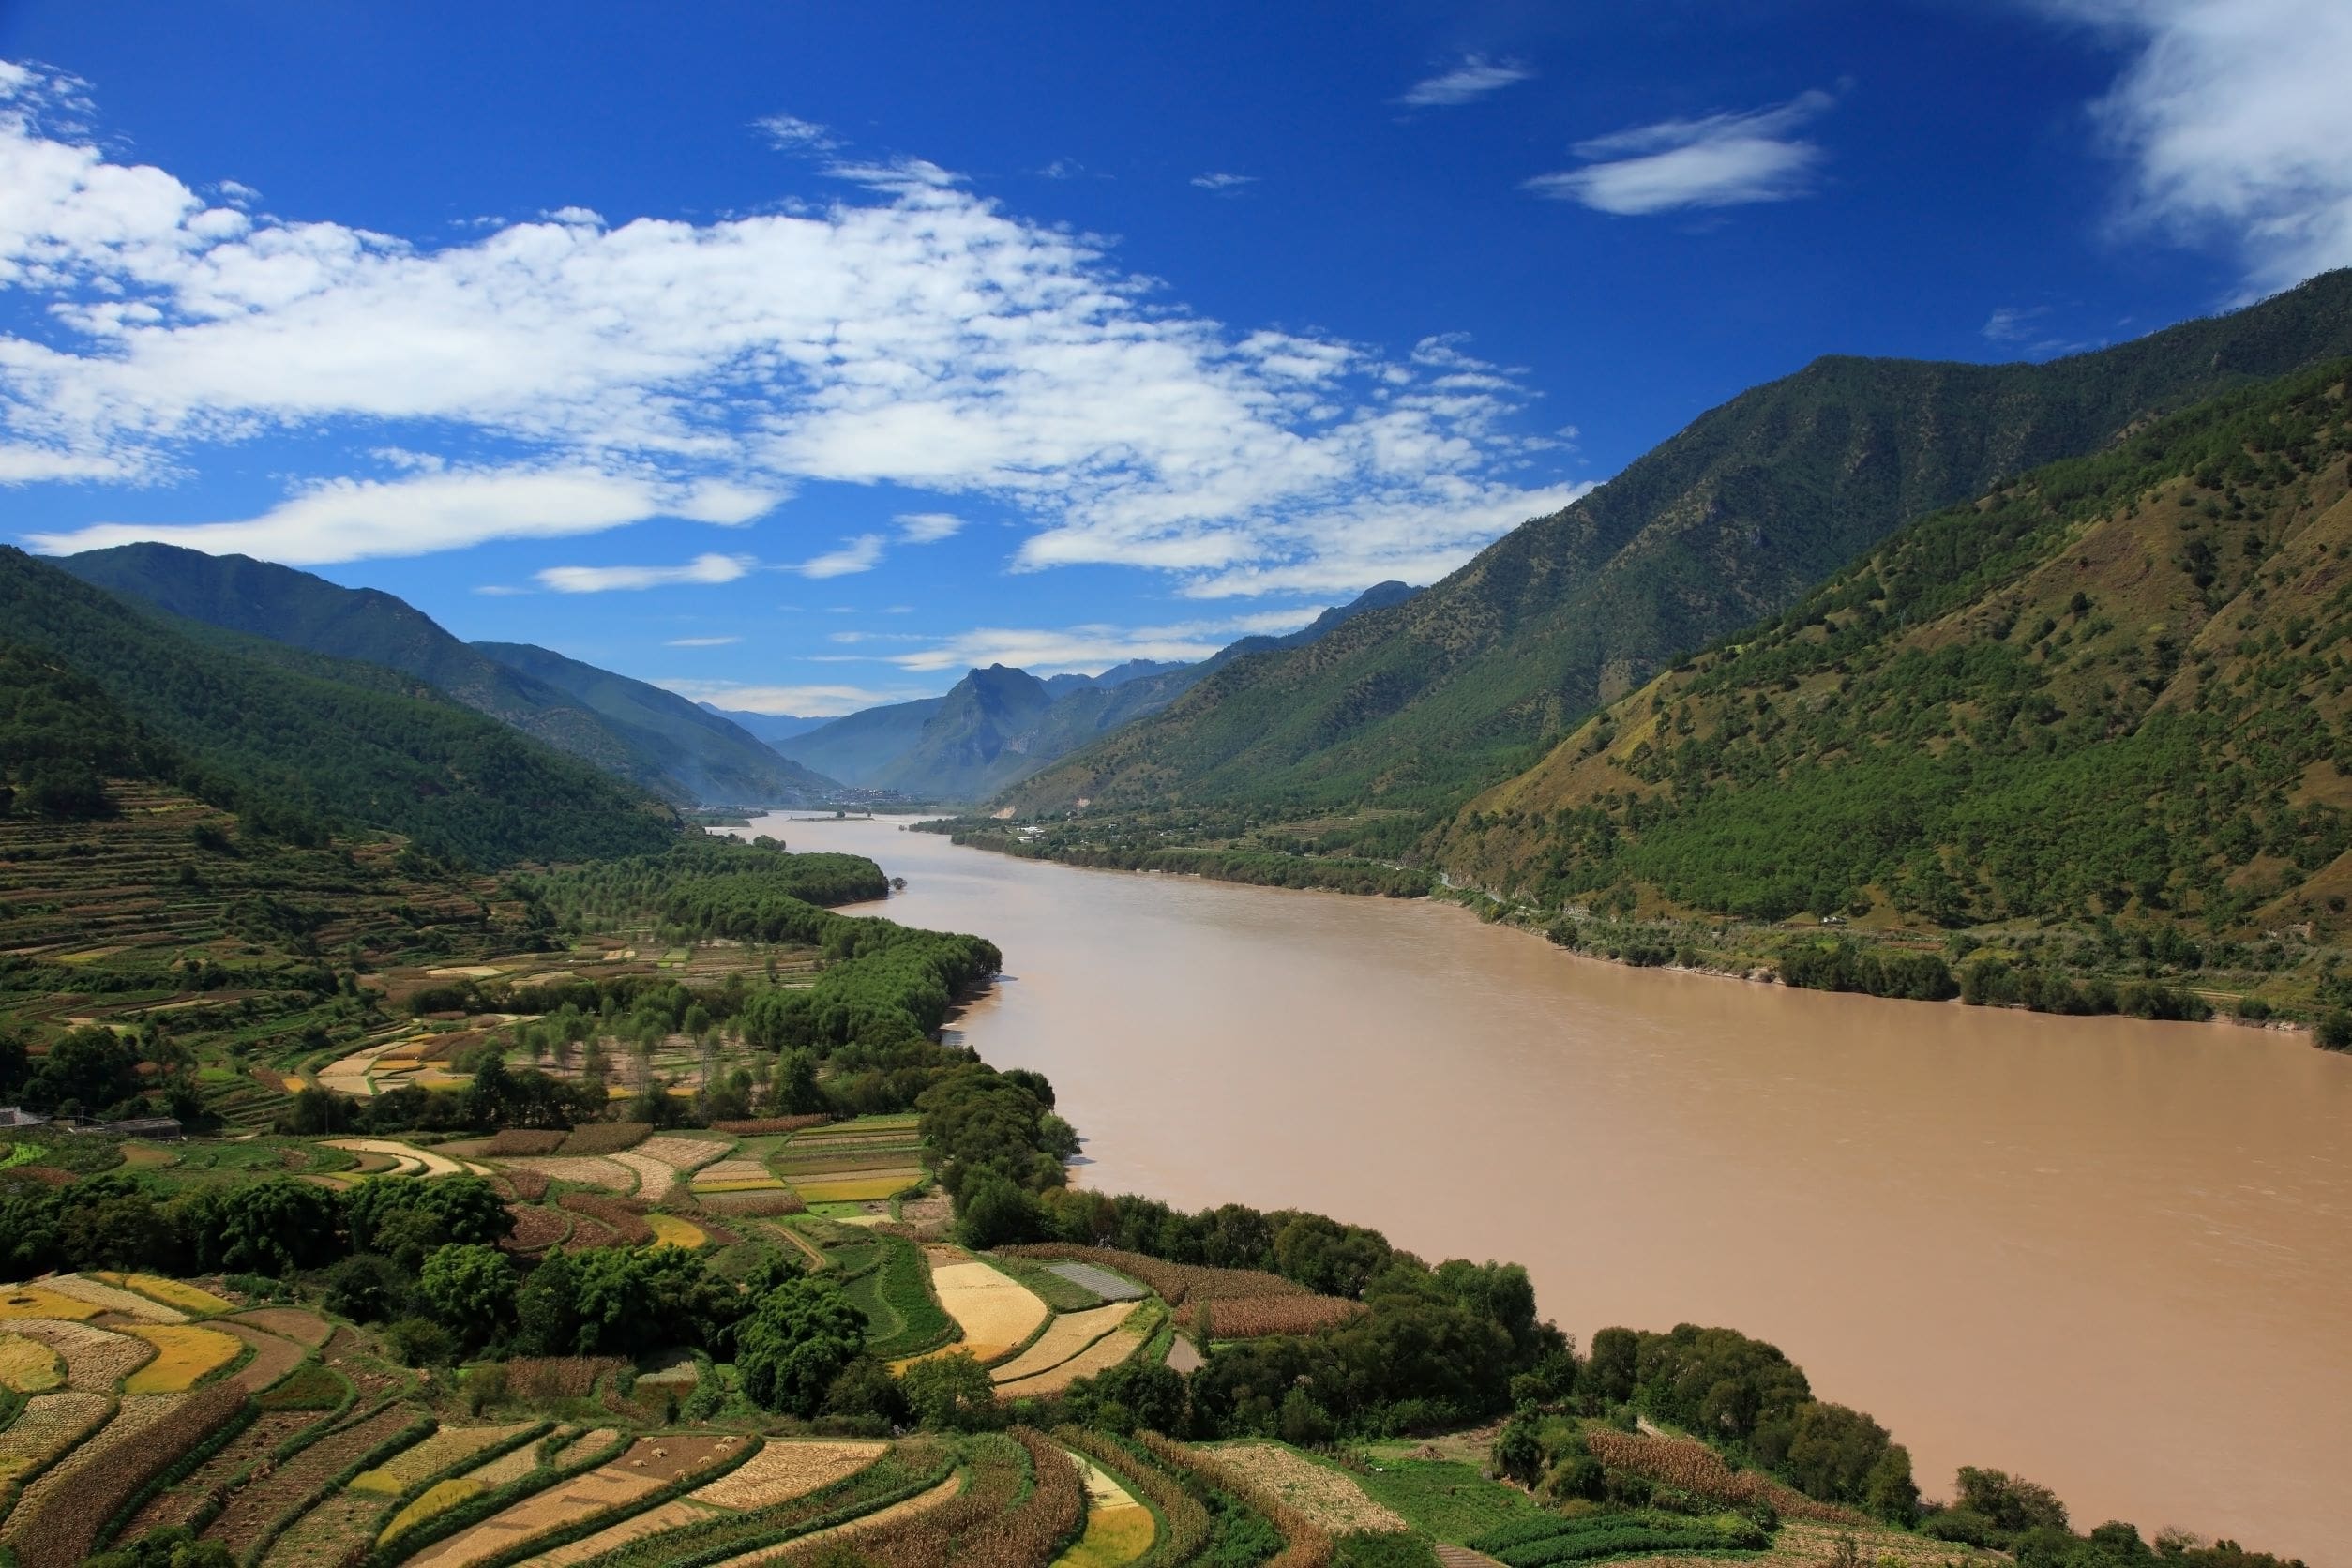 Yangtze River Basin image